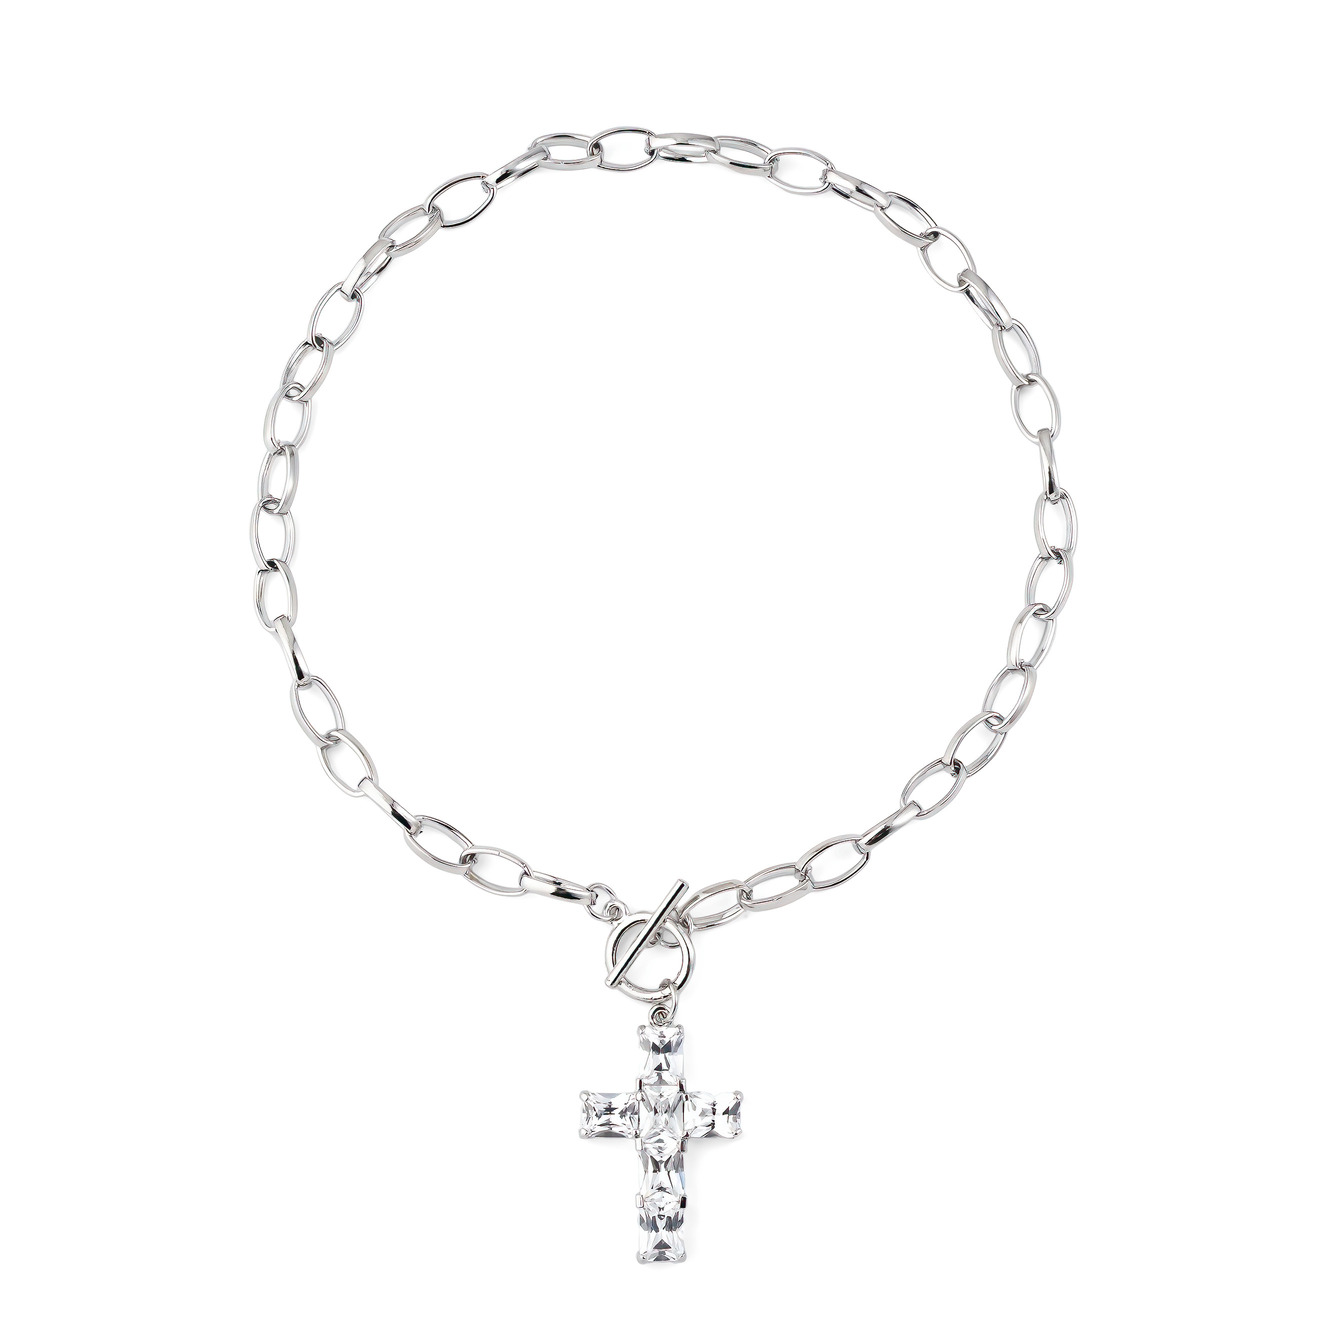 Herald Percy Серебристое колье-цепь с подвеской крестом из кристаллов lisa smith тройное серебристое колье цепь с жемчугом и подвеской каплей